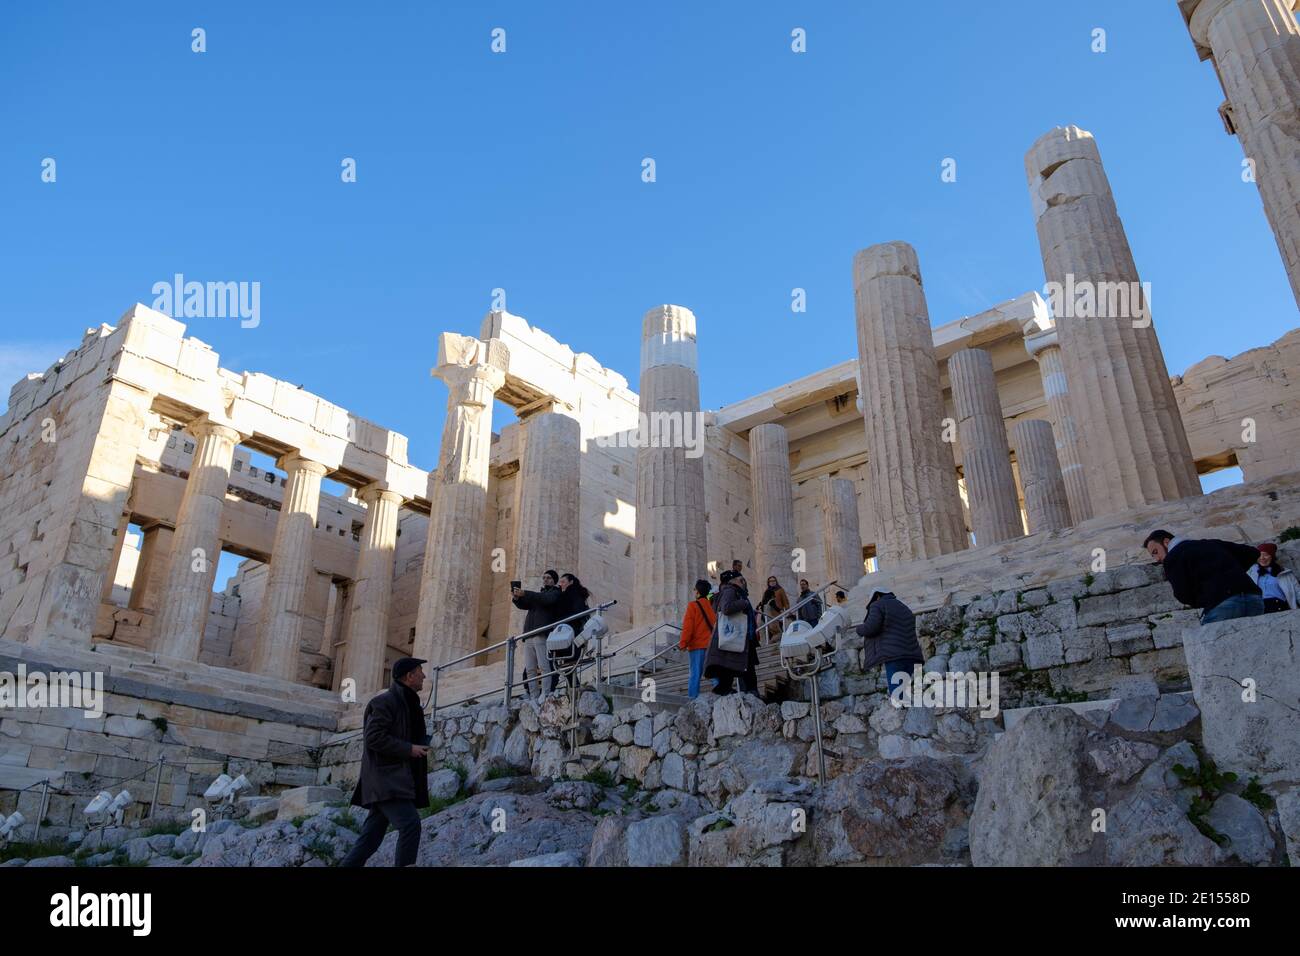 Athens - December 2019: view of Propilei Stock Photo